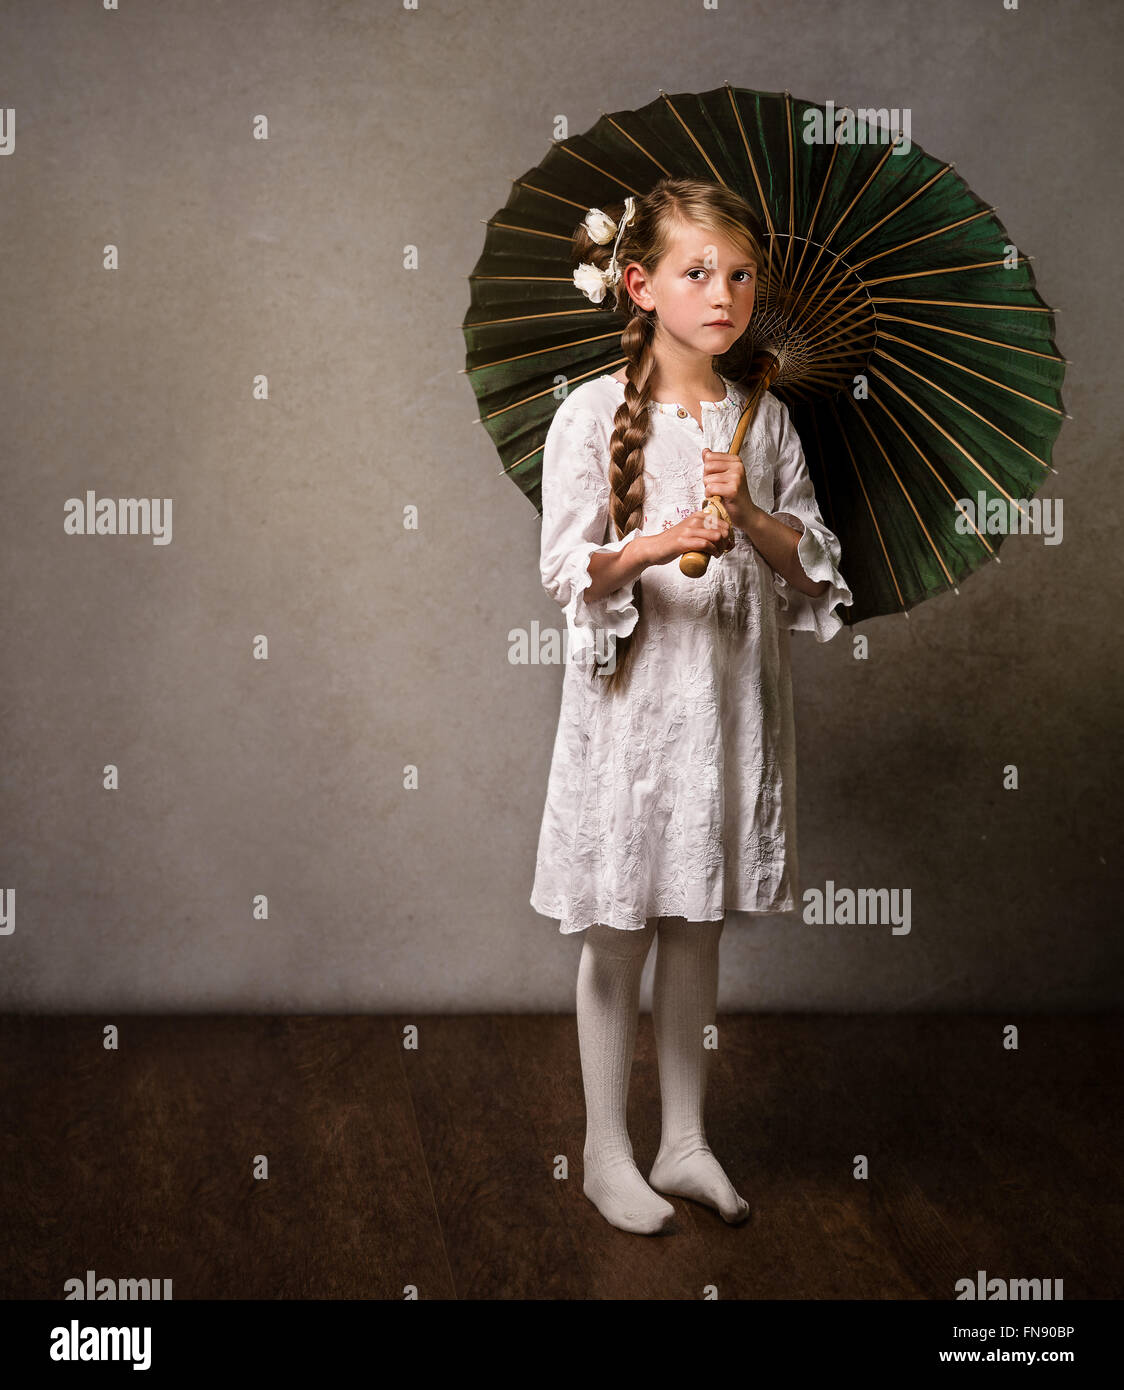 Girl holding a parasol Banque D'Images